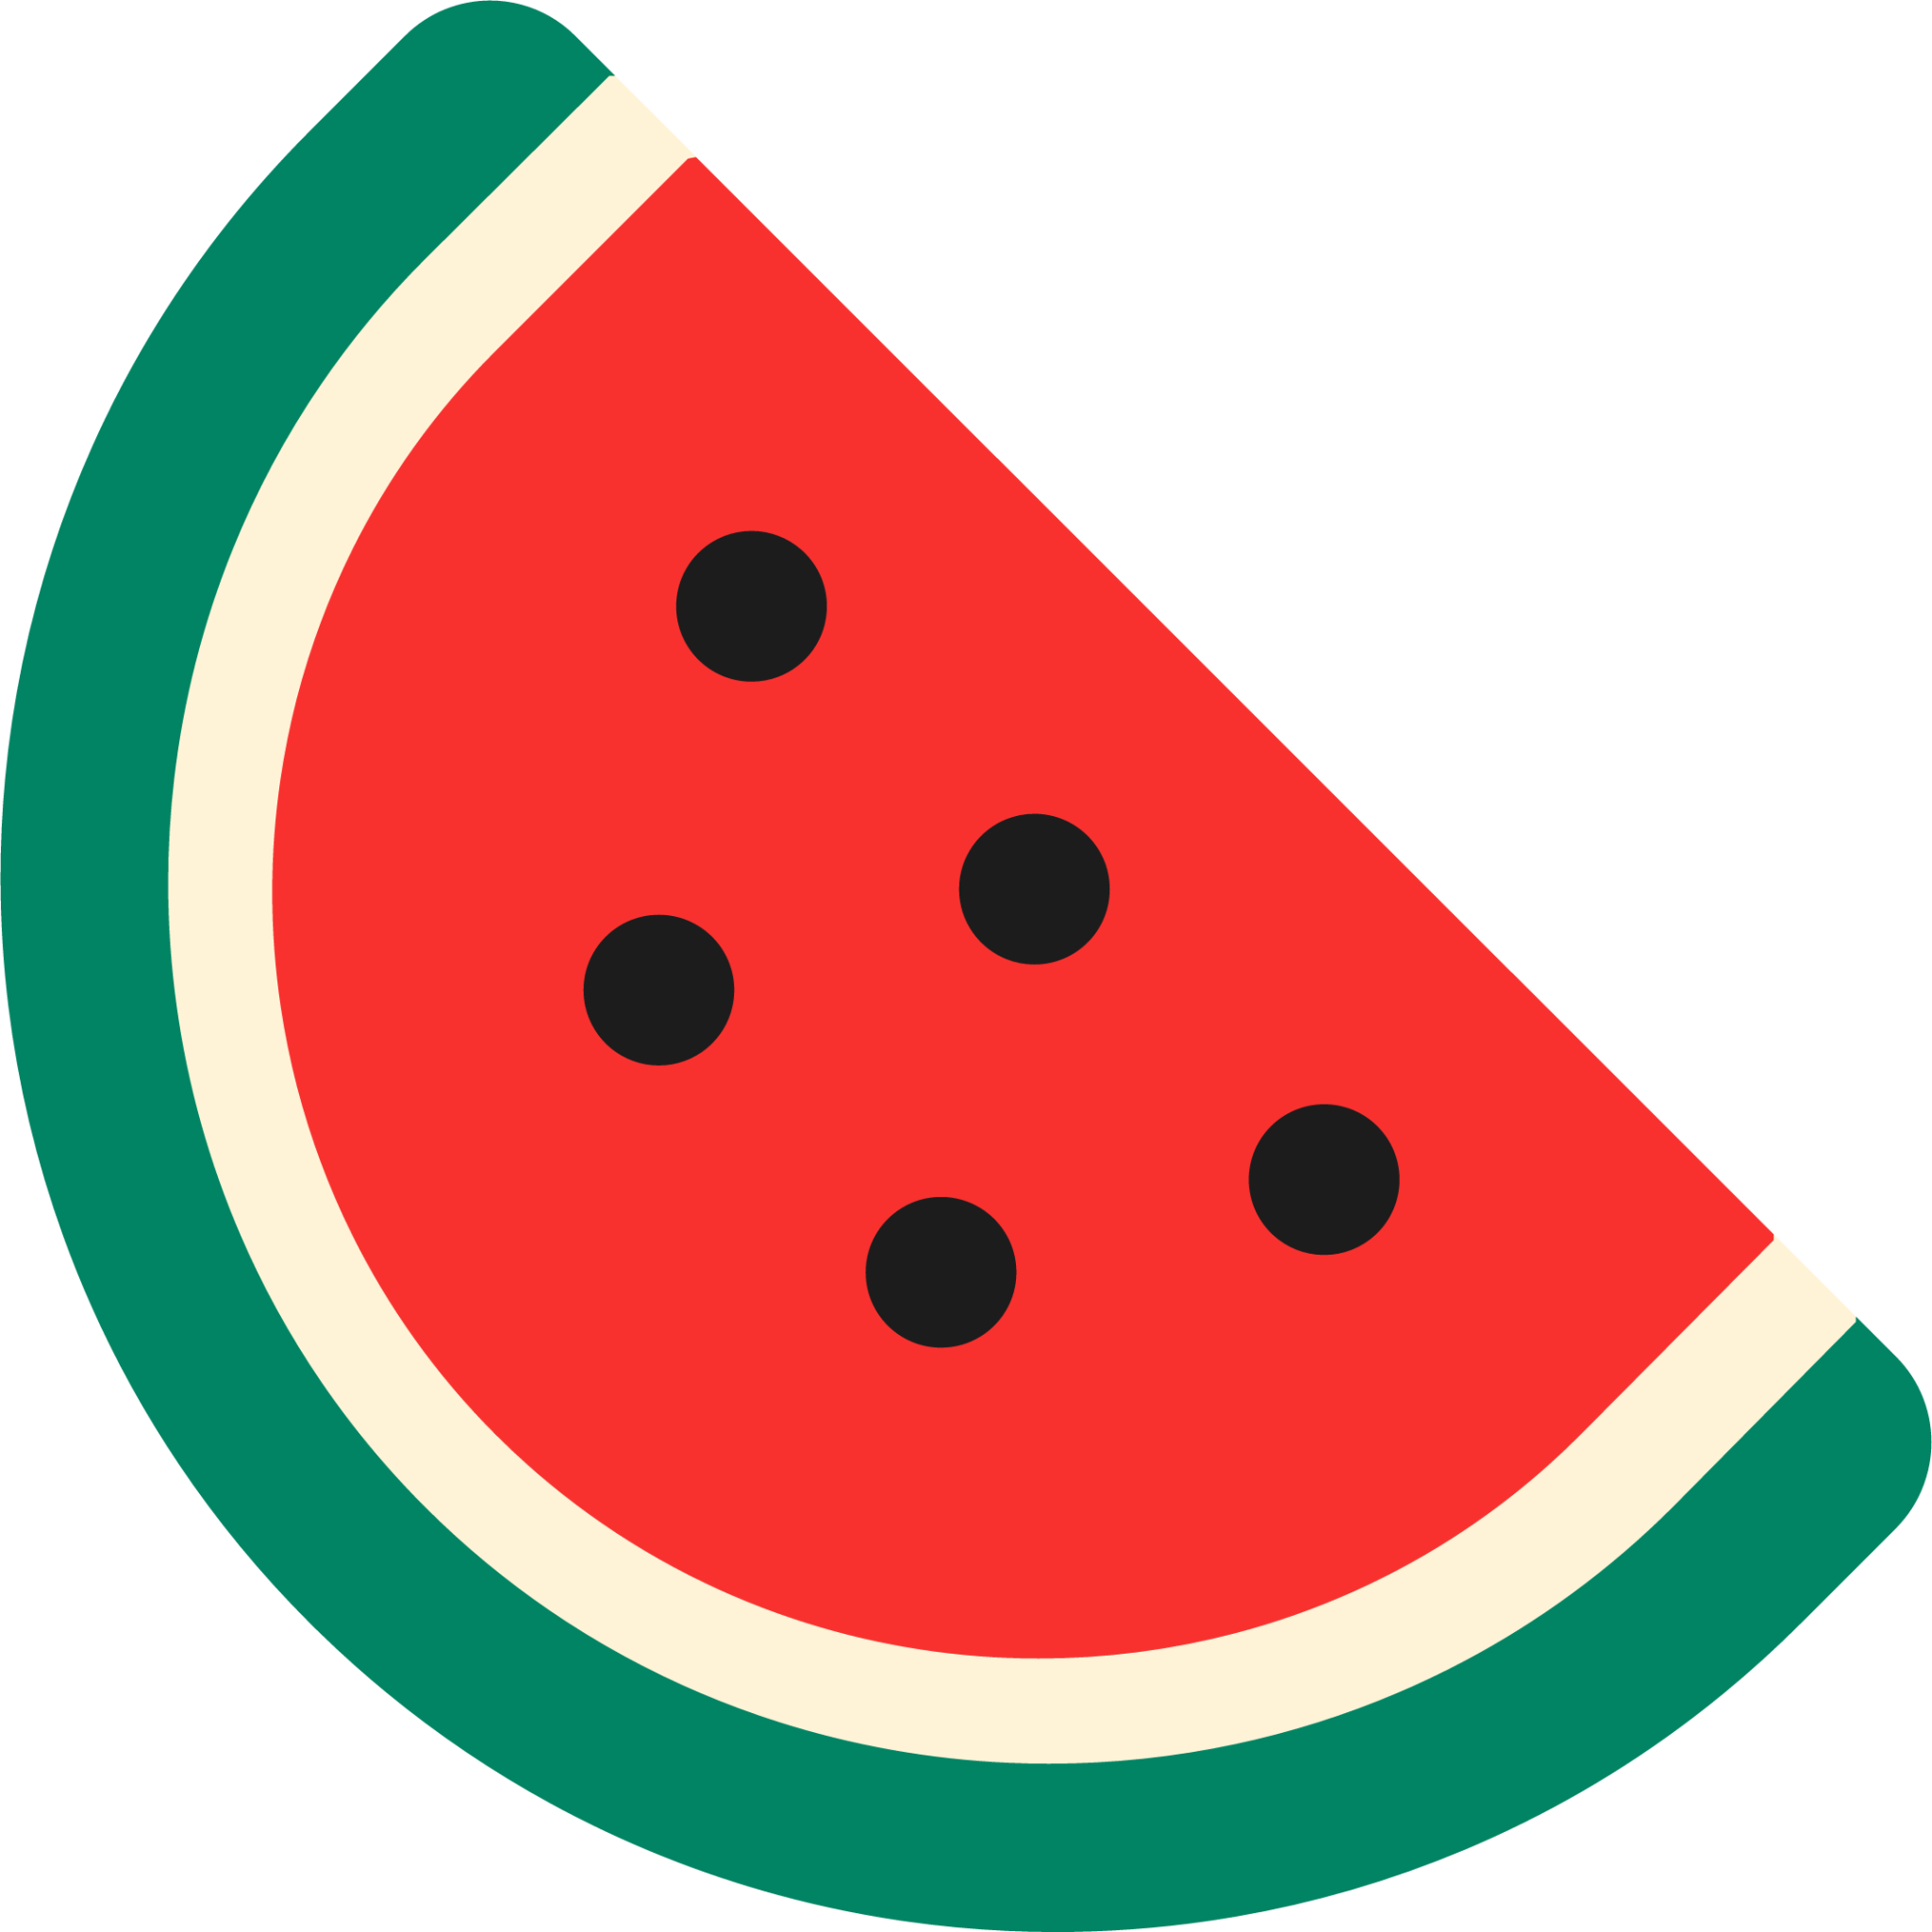 watermelon emoji background